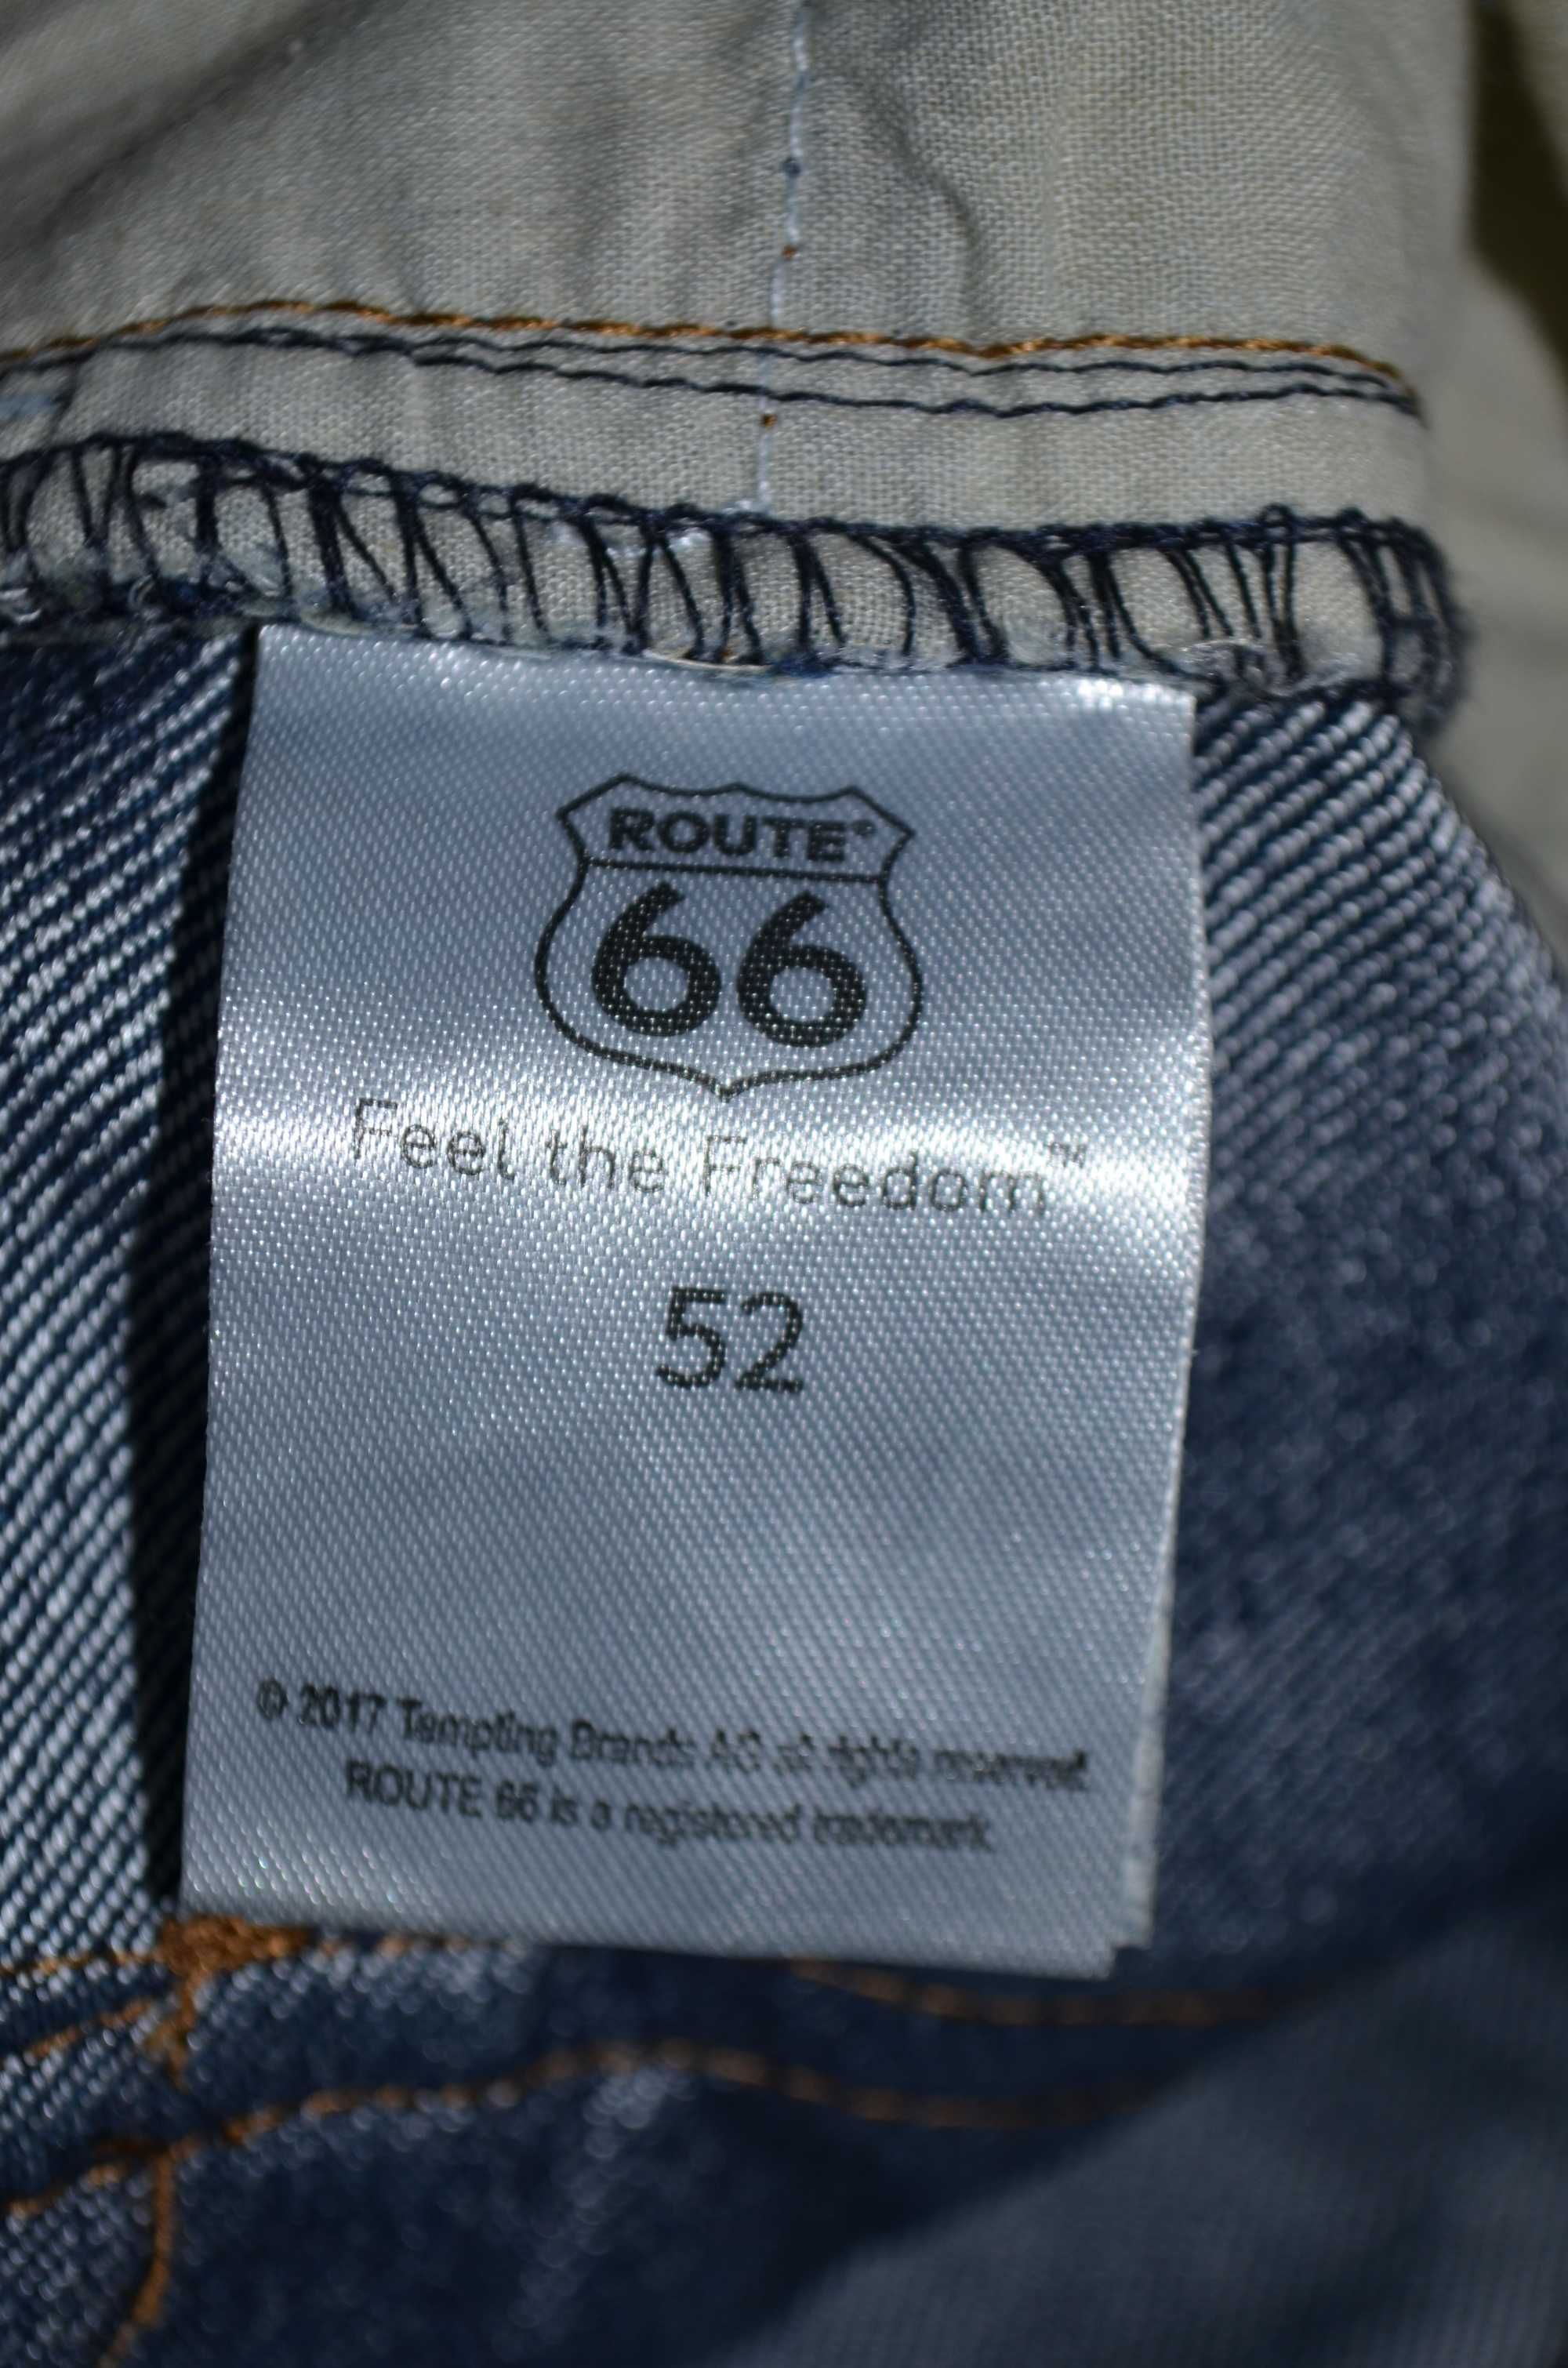 Джинсы Route 66 U.S. Highway Casual Motorcycle Pants Size 52